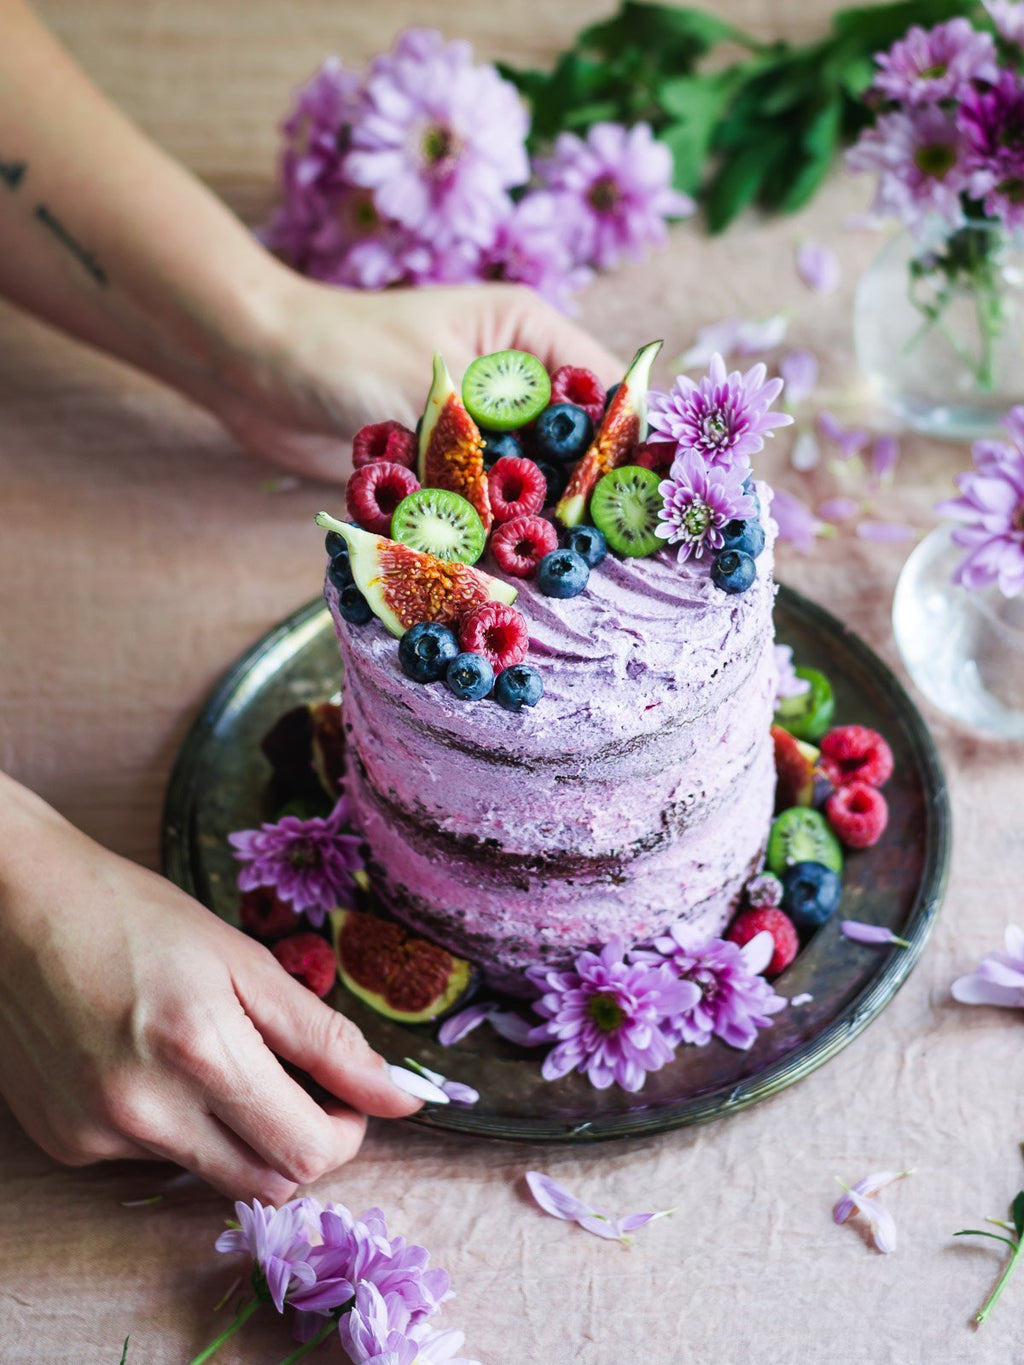 26 Fall Wedding Cakes - Wedding Cake Ideas for Fall